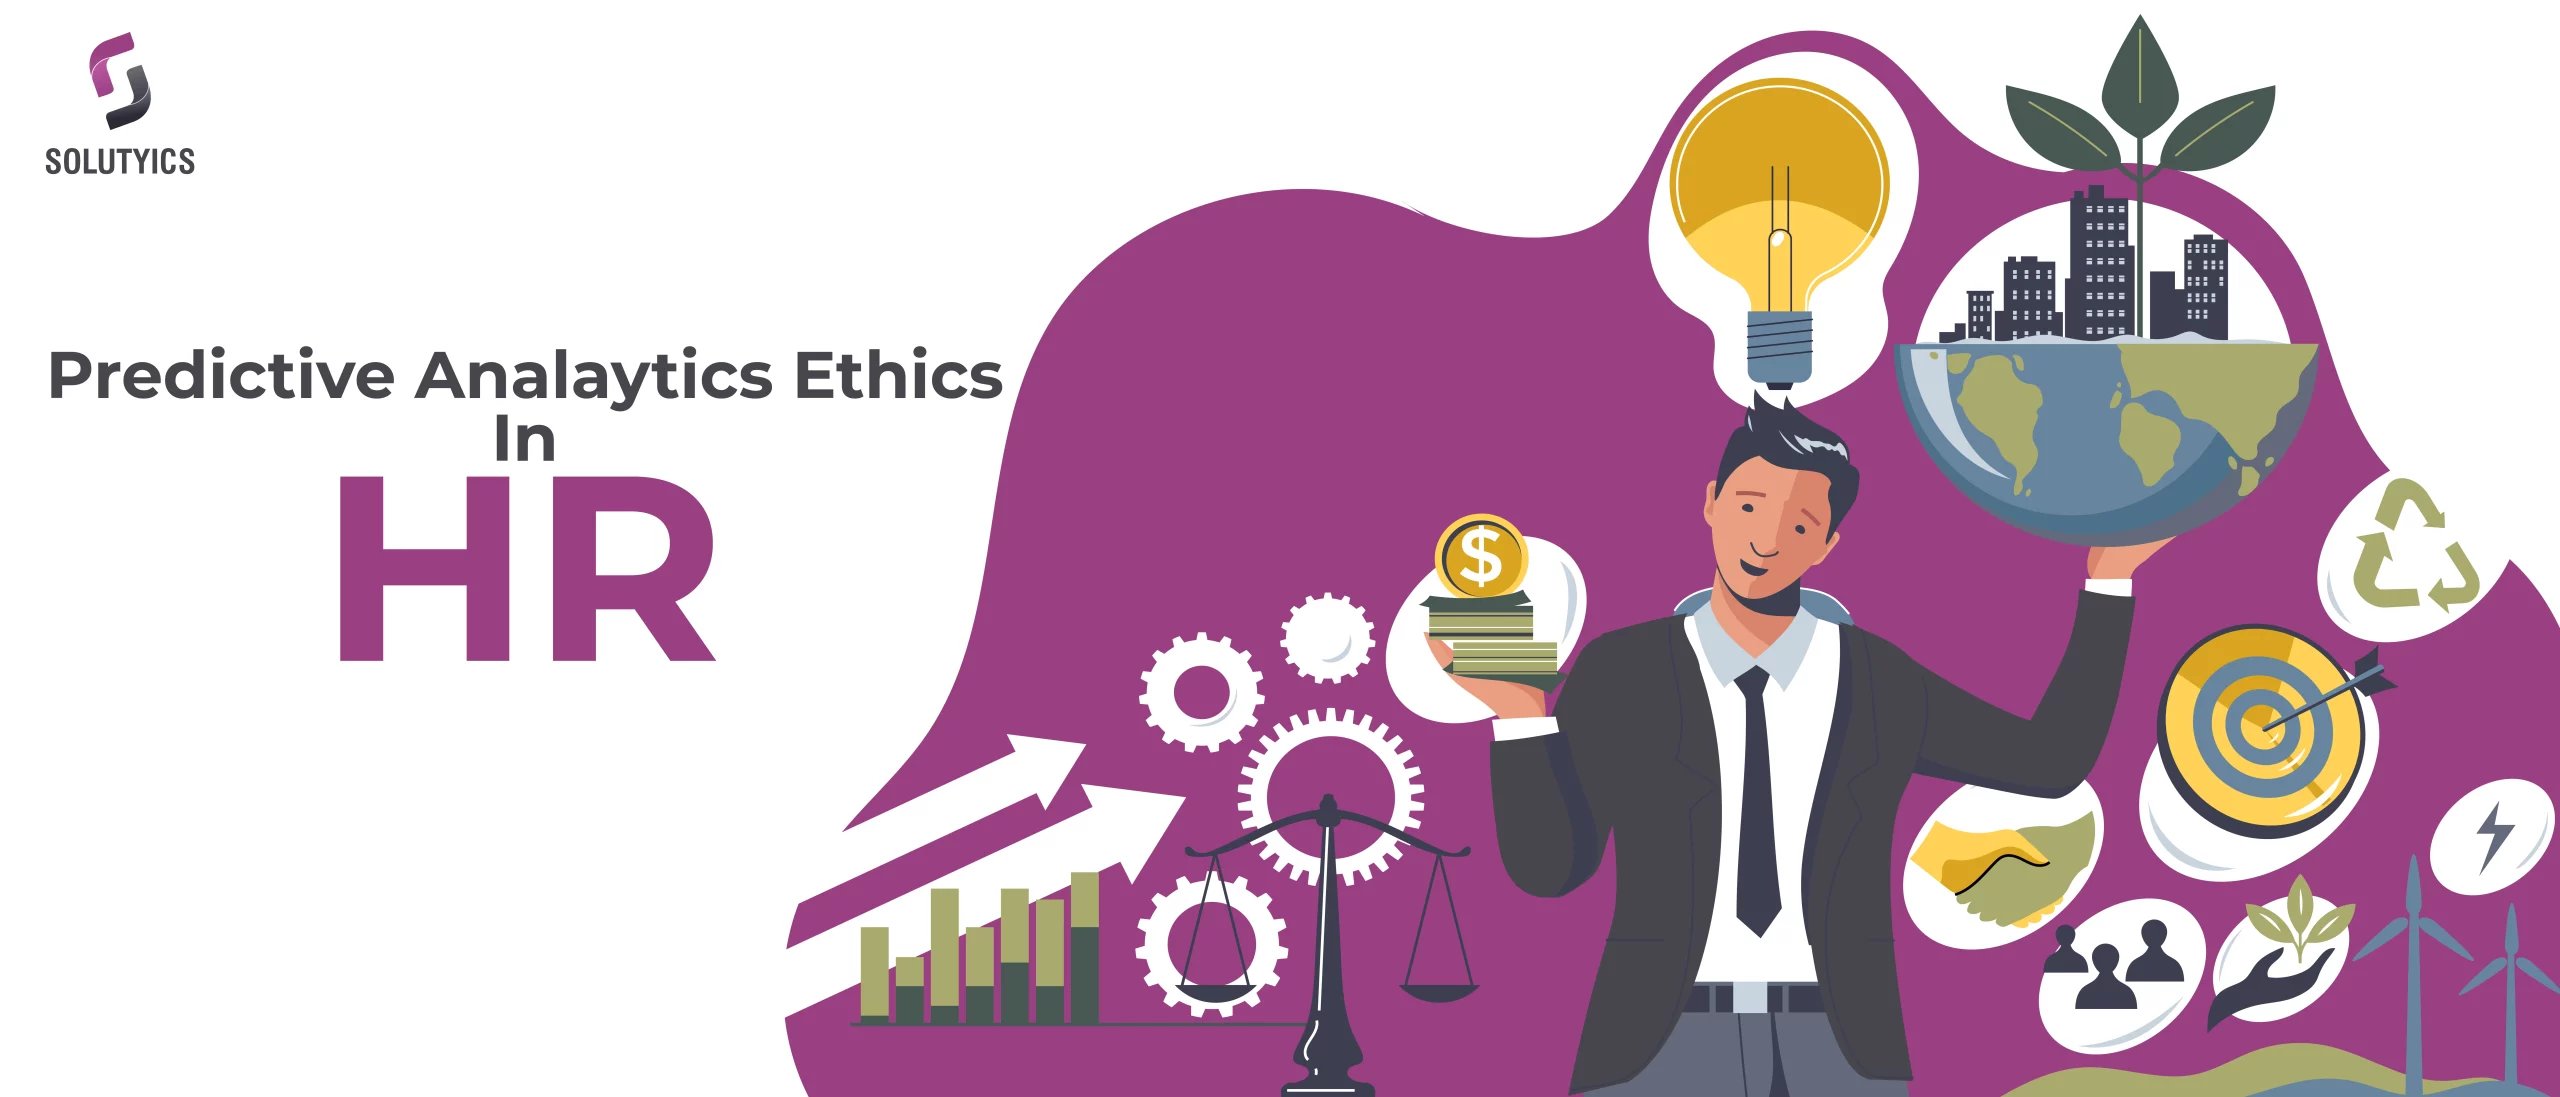 Predictive Analytics Ethics in HR